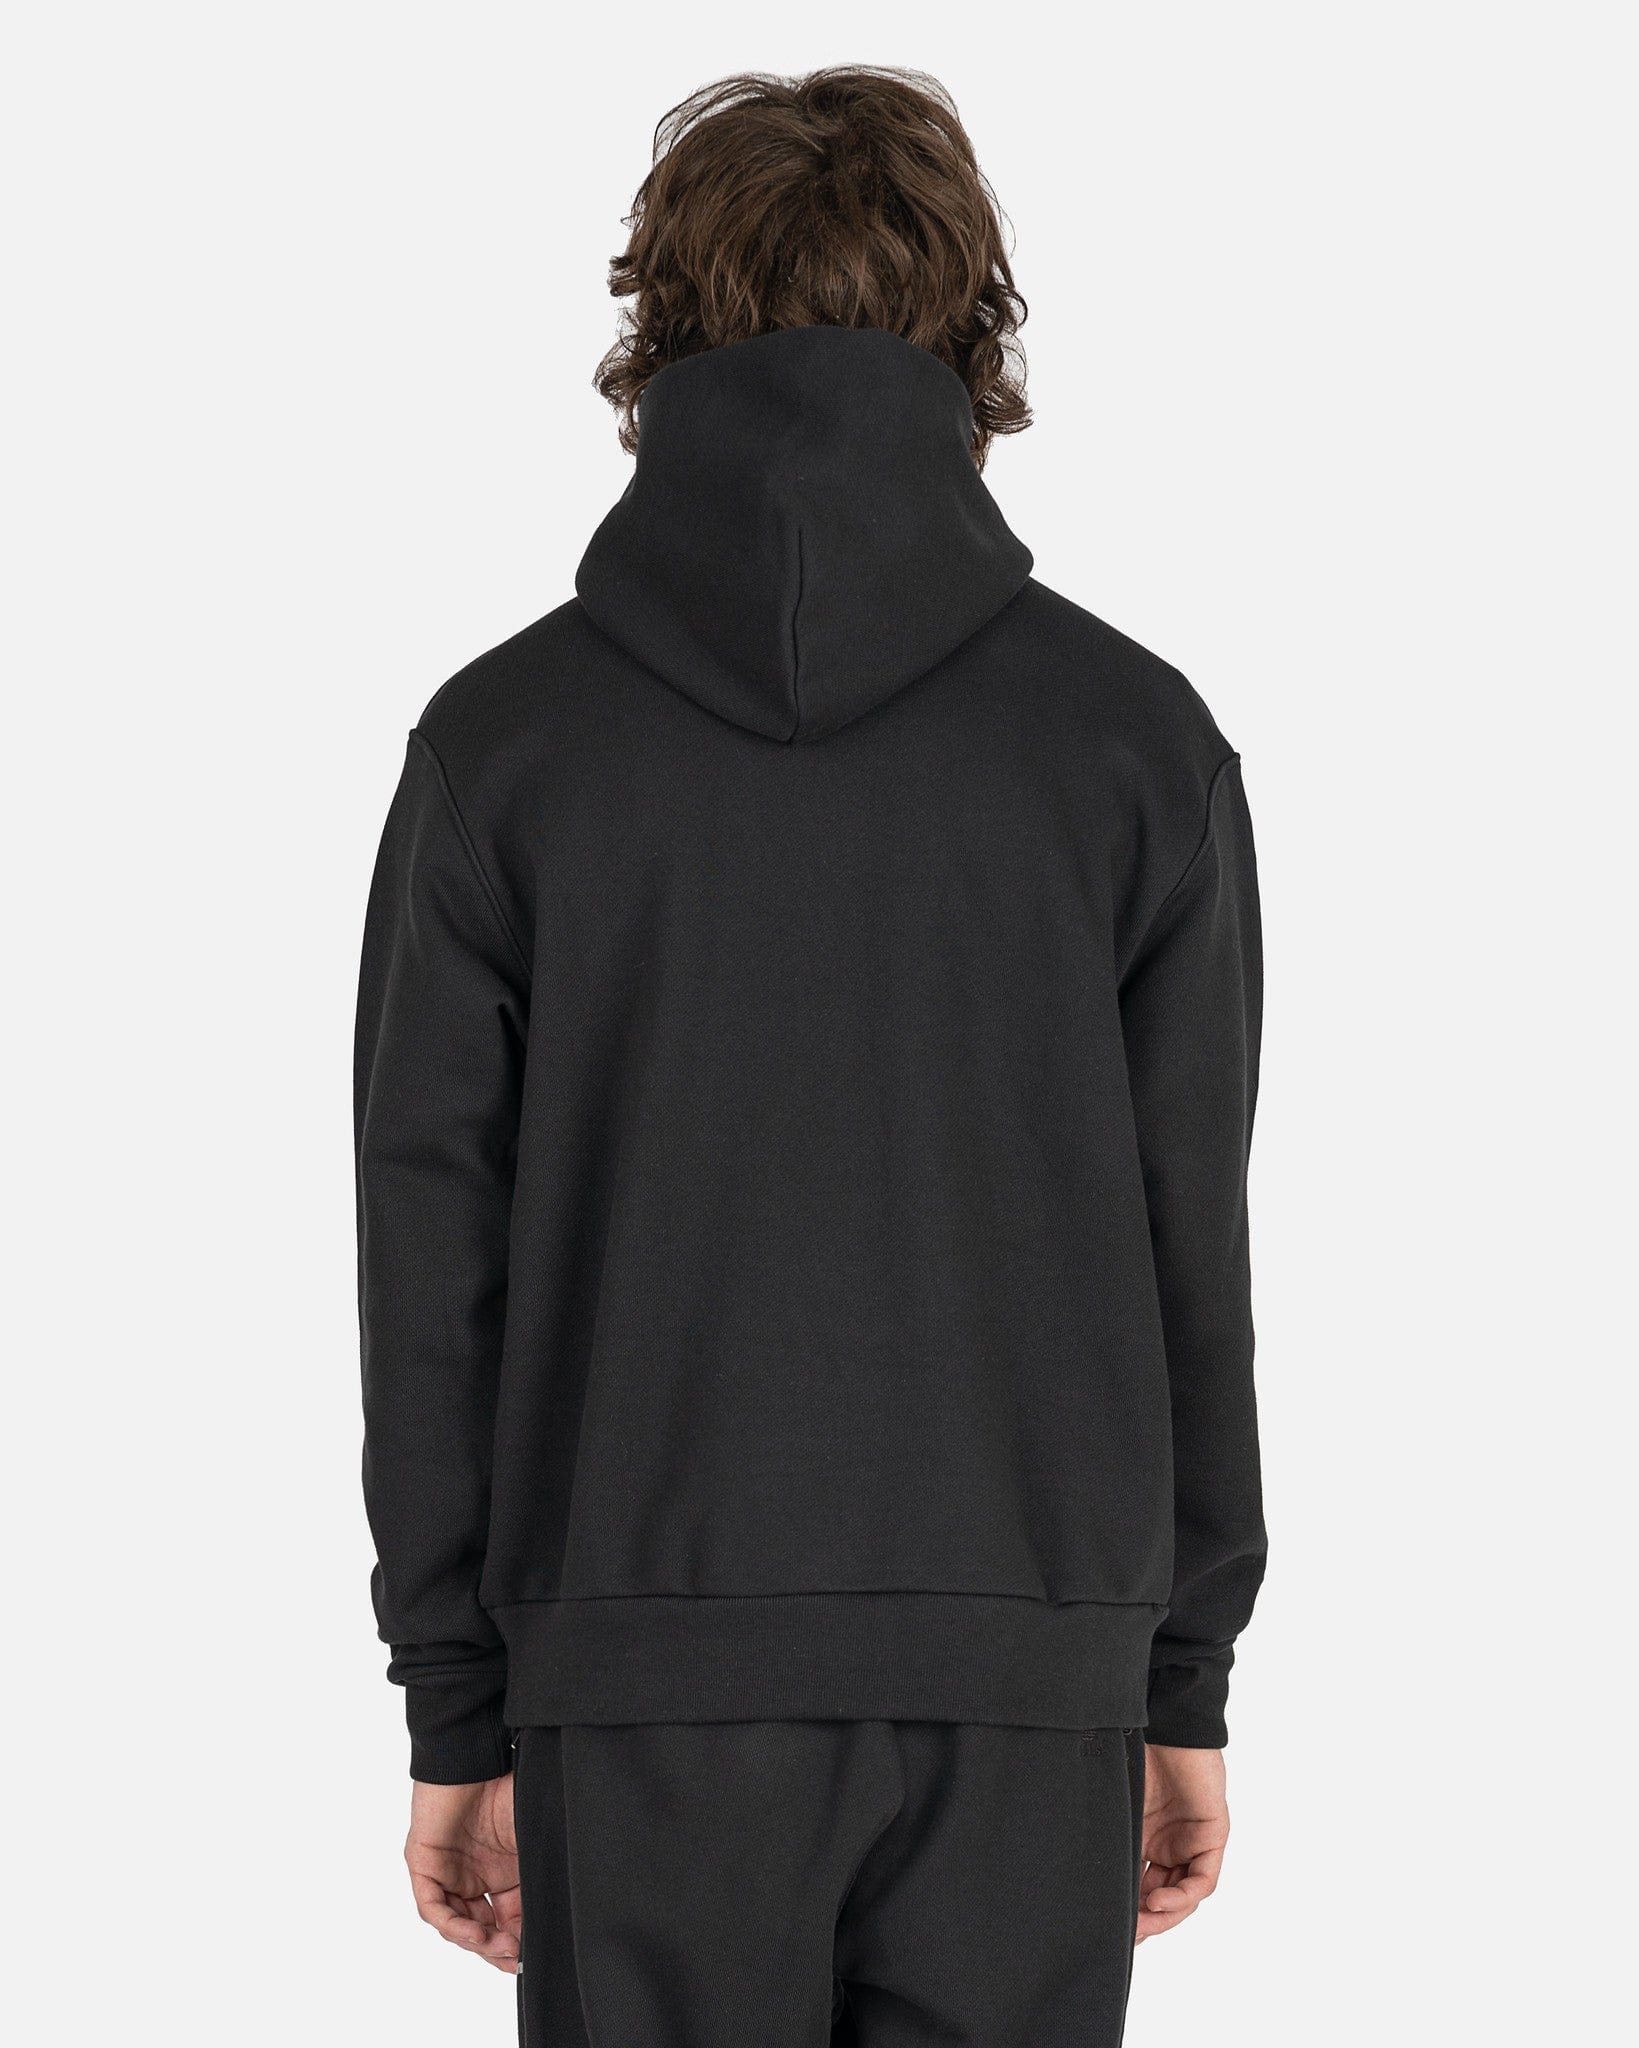 Adidas Men's Sweatshirts Human Race Basic Hoodie in Black